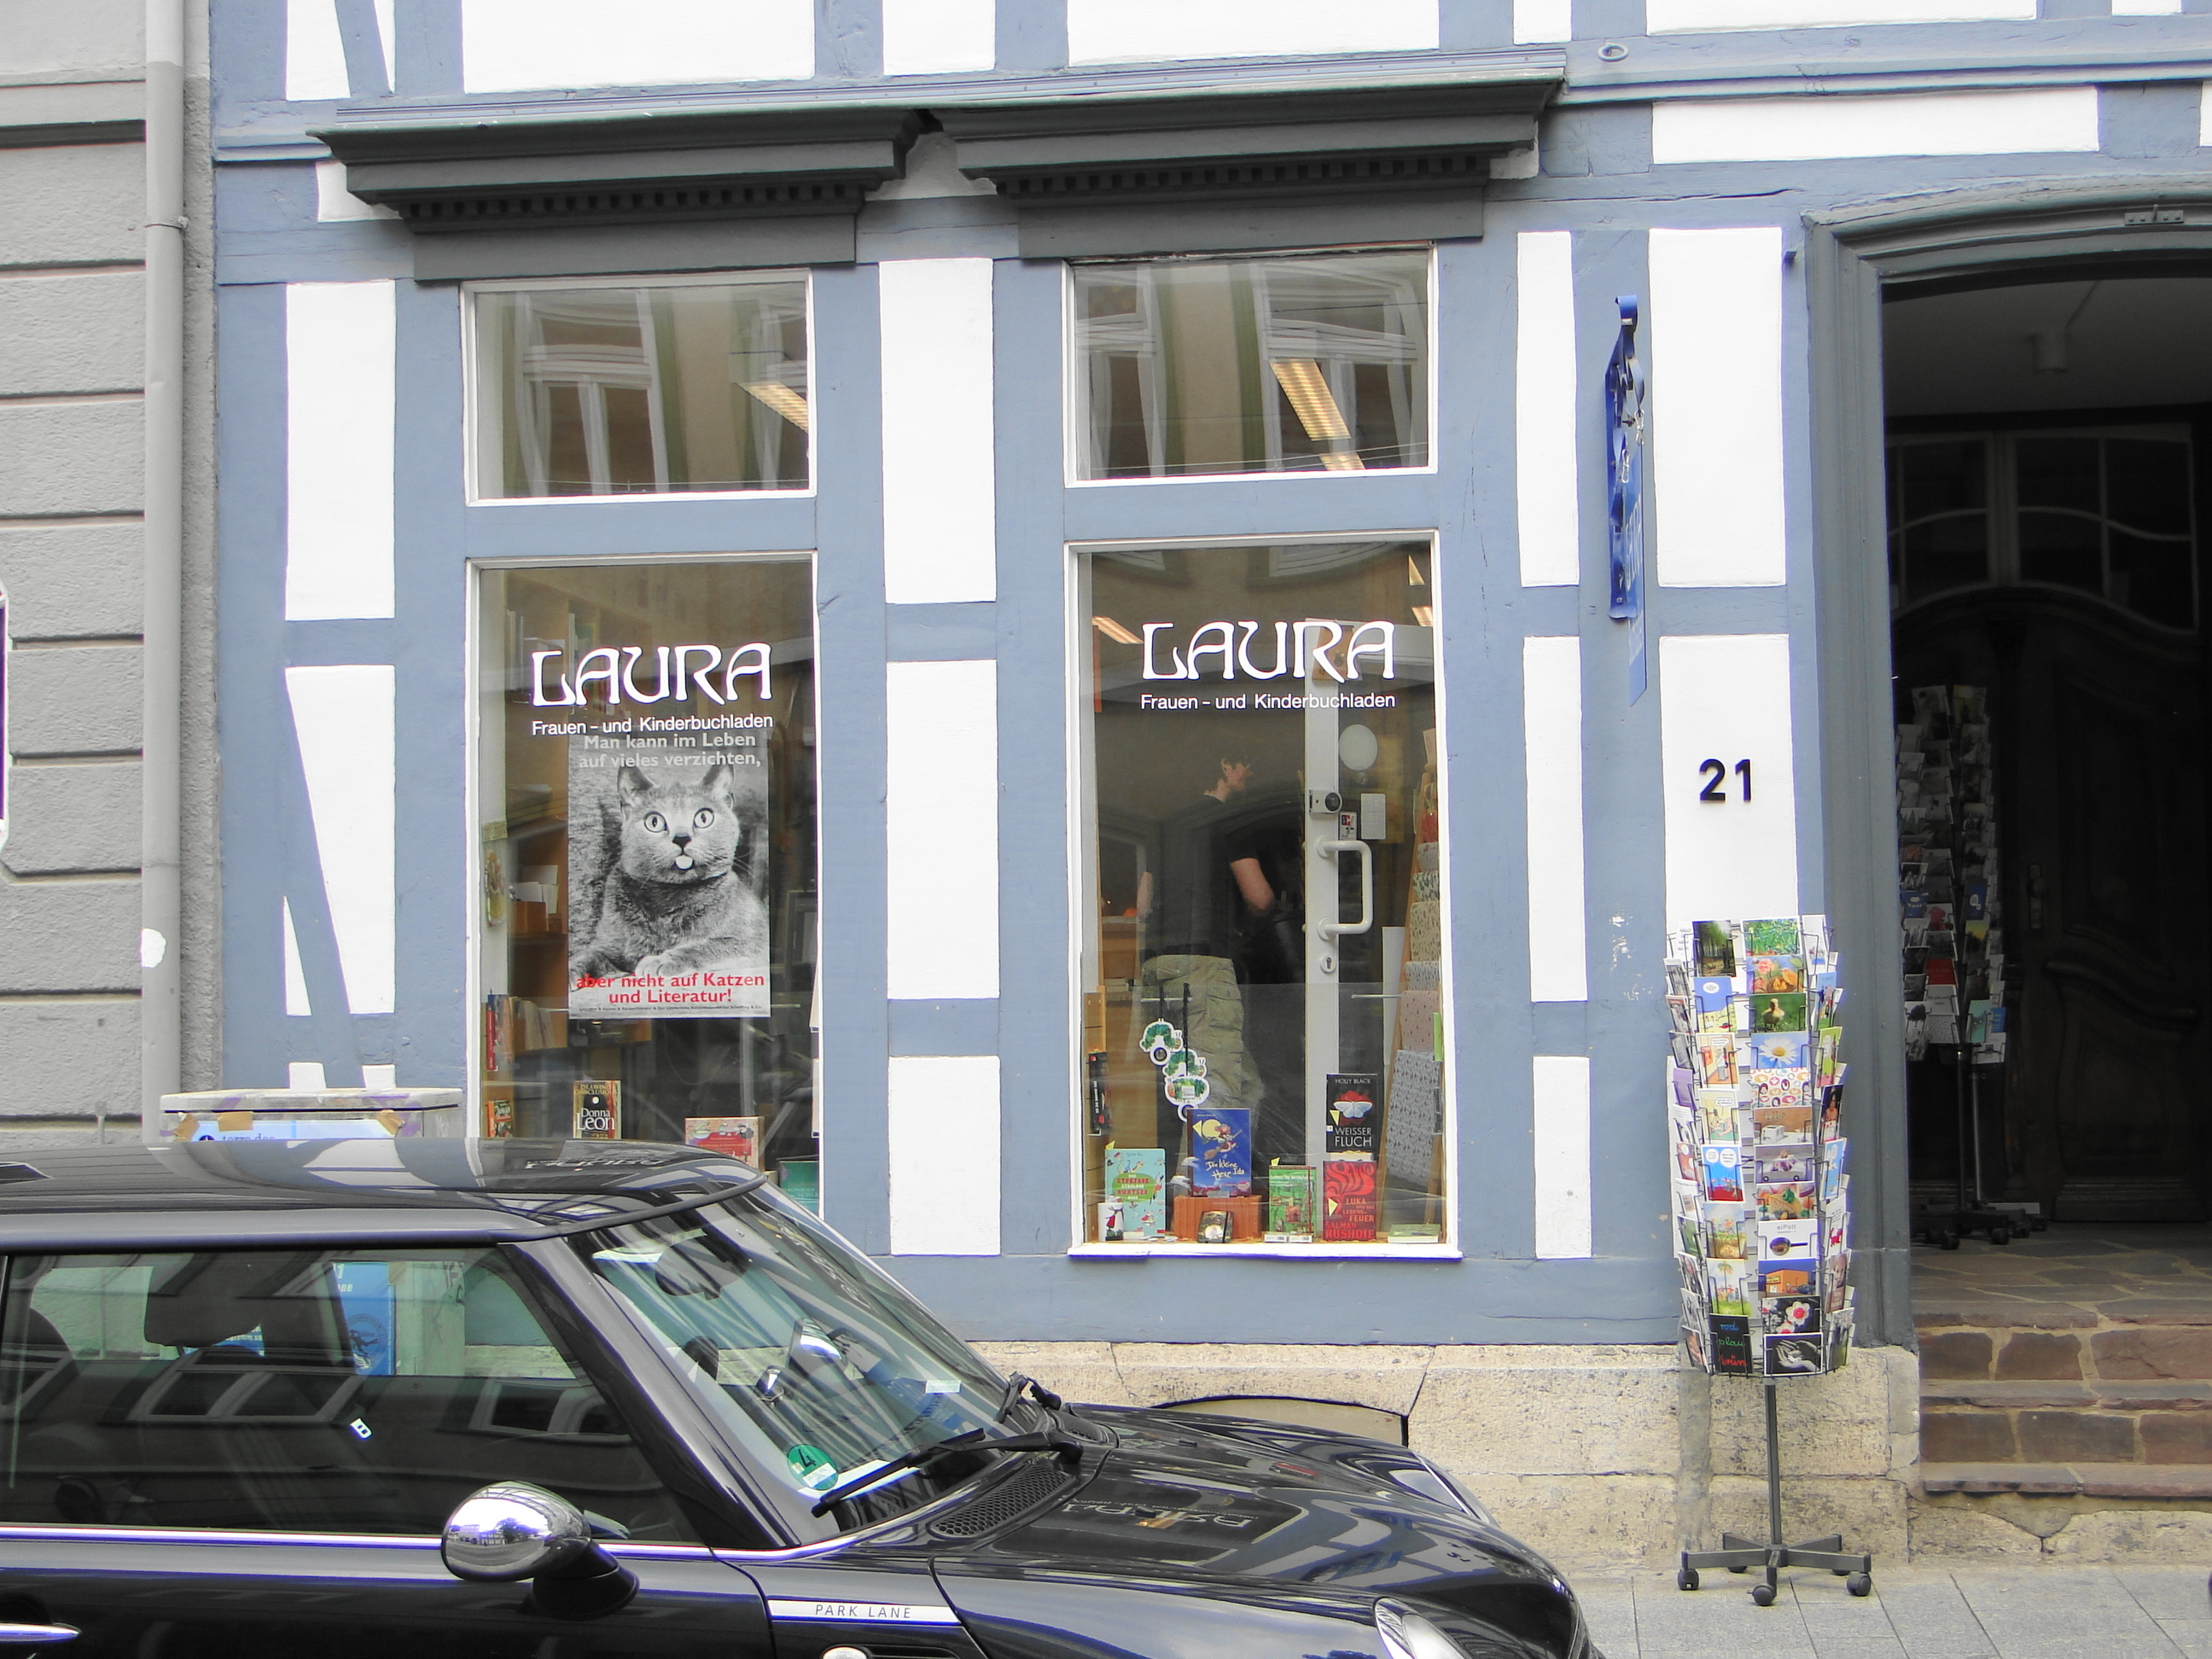 Laura Frauen- u. Kinderbuchladen GmbH  in der Burgstr. 21